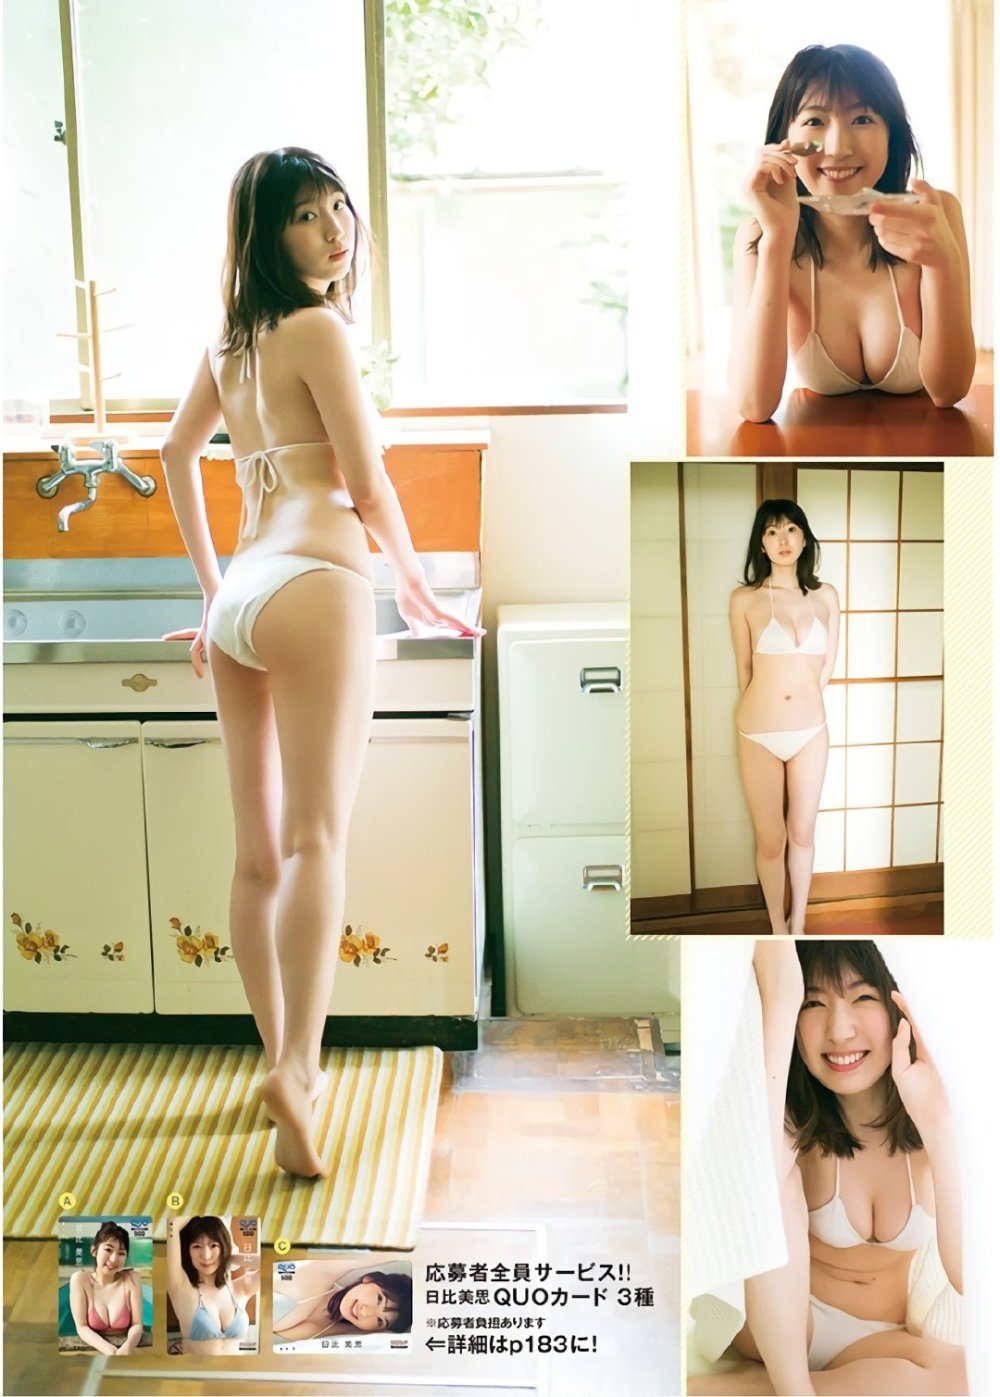 Mikoto Hibi Sexy and Hottest Photos , Latest Pics